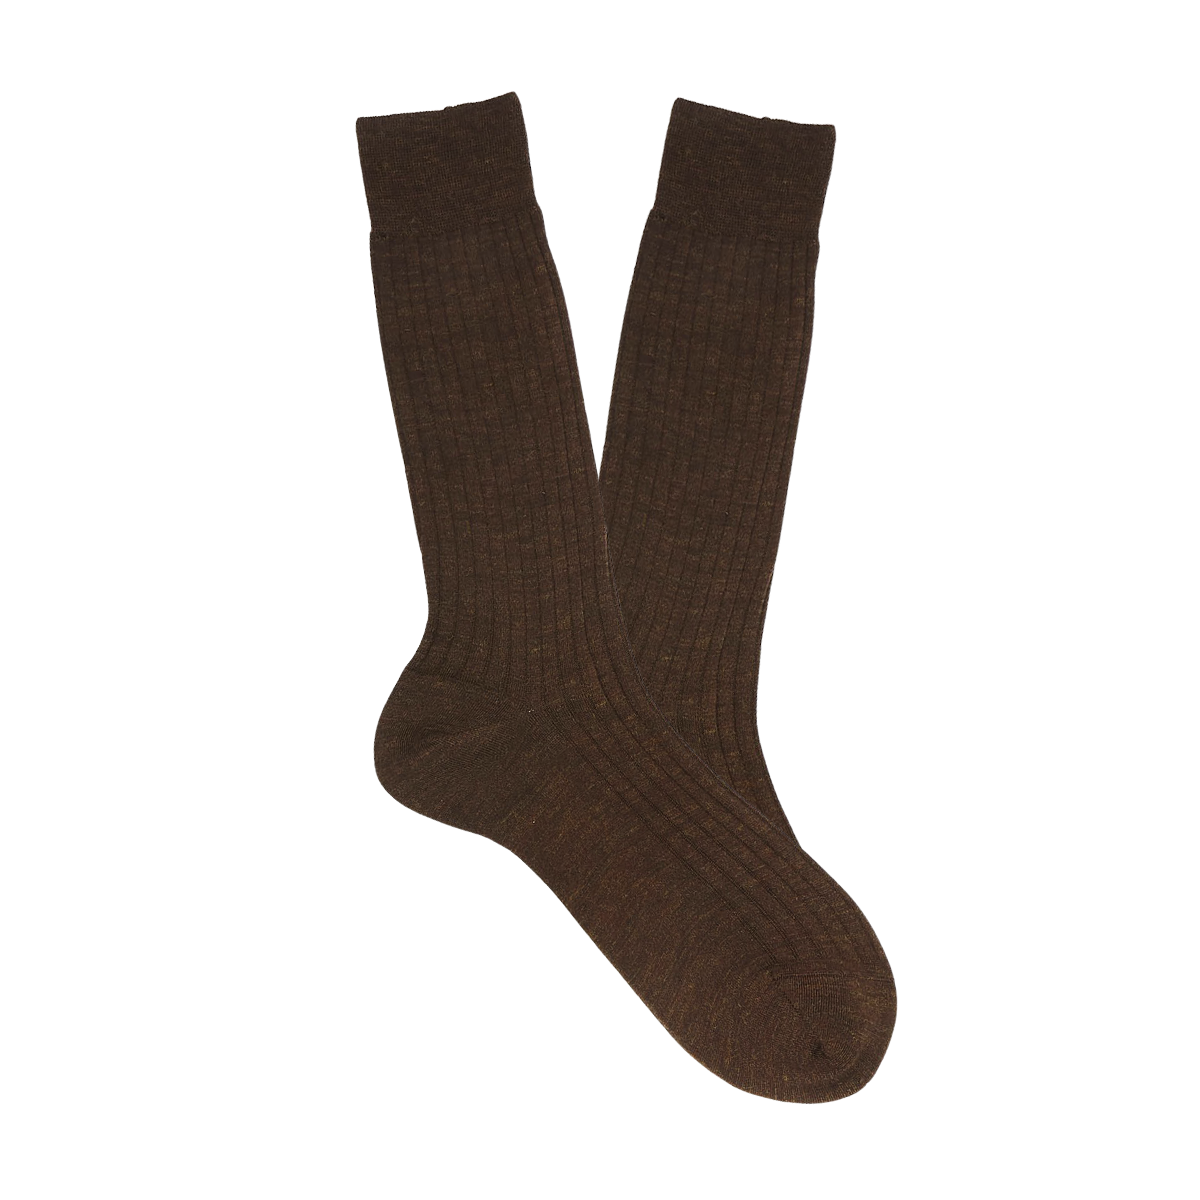 Bresciani Rust Brown Ribbed Wool Nylon Socks Feature